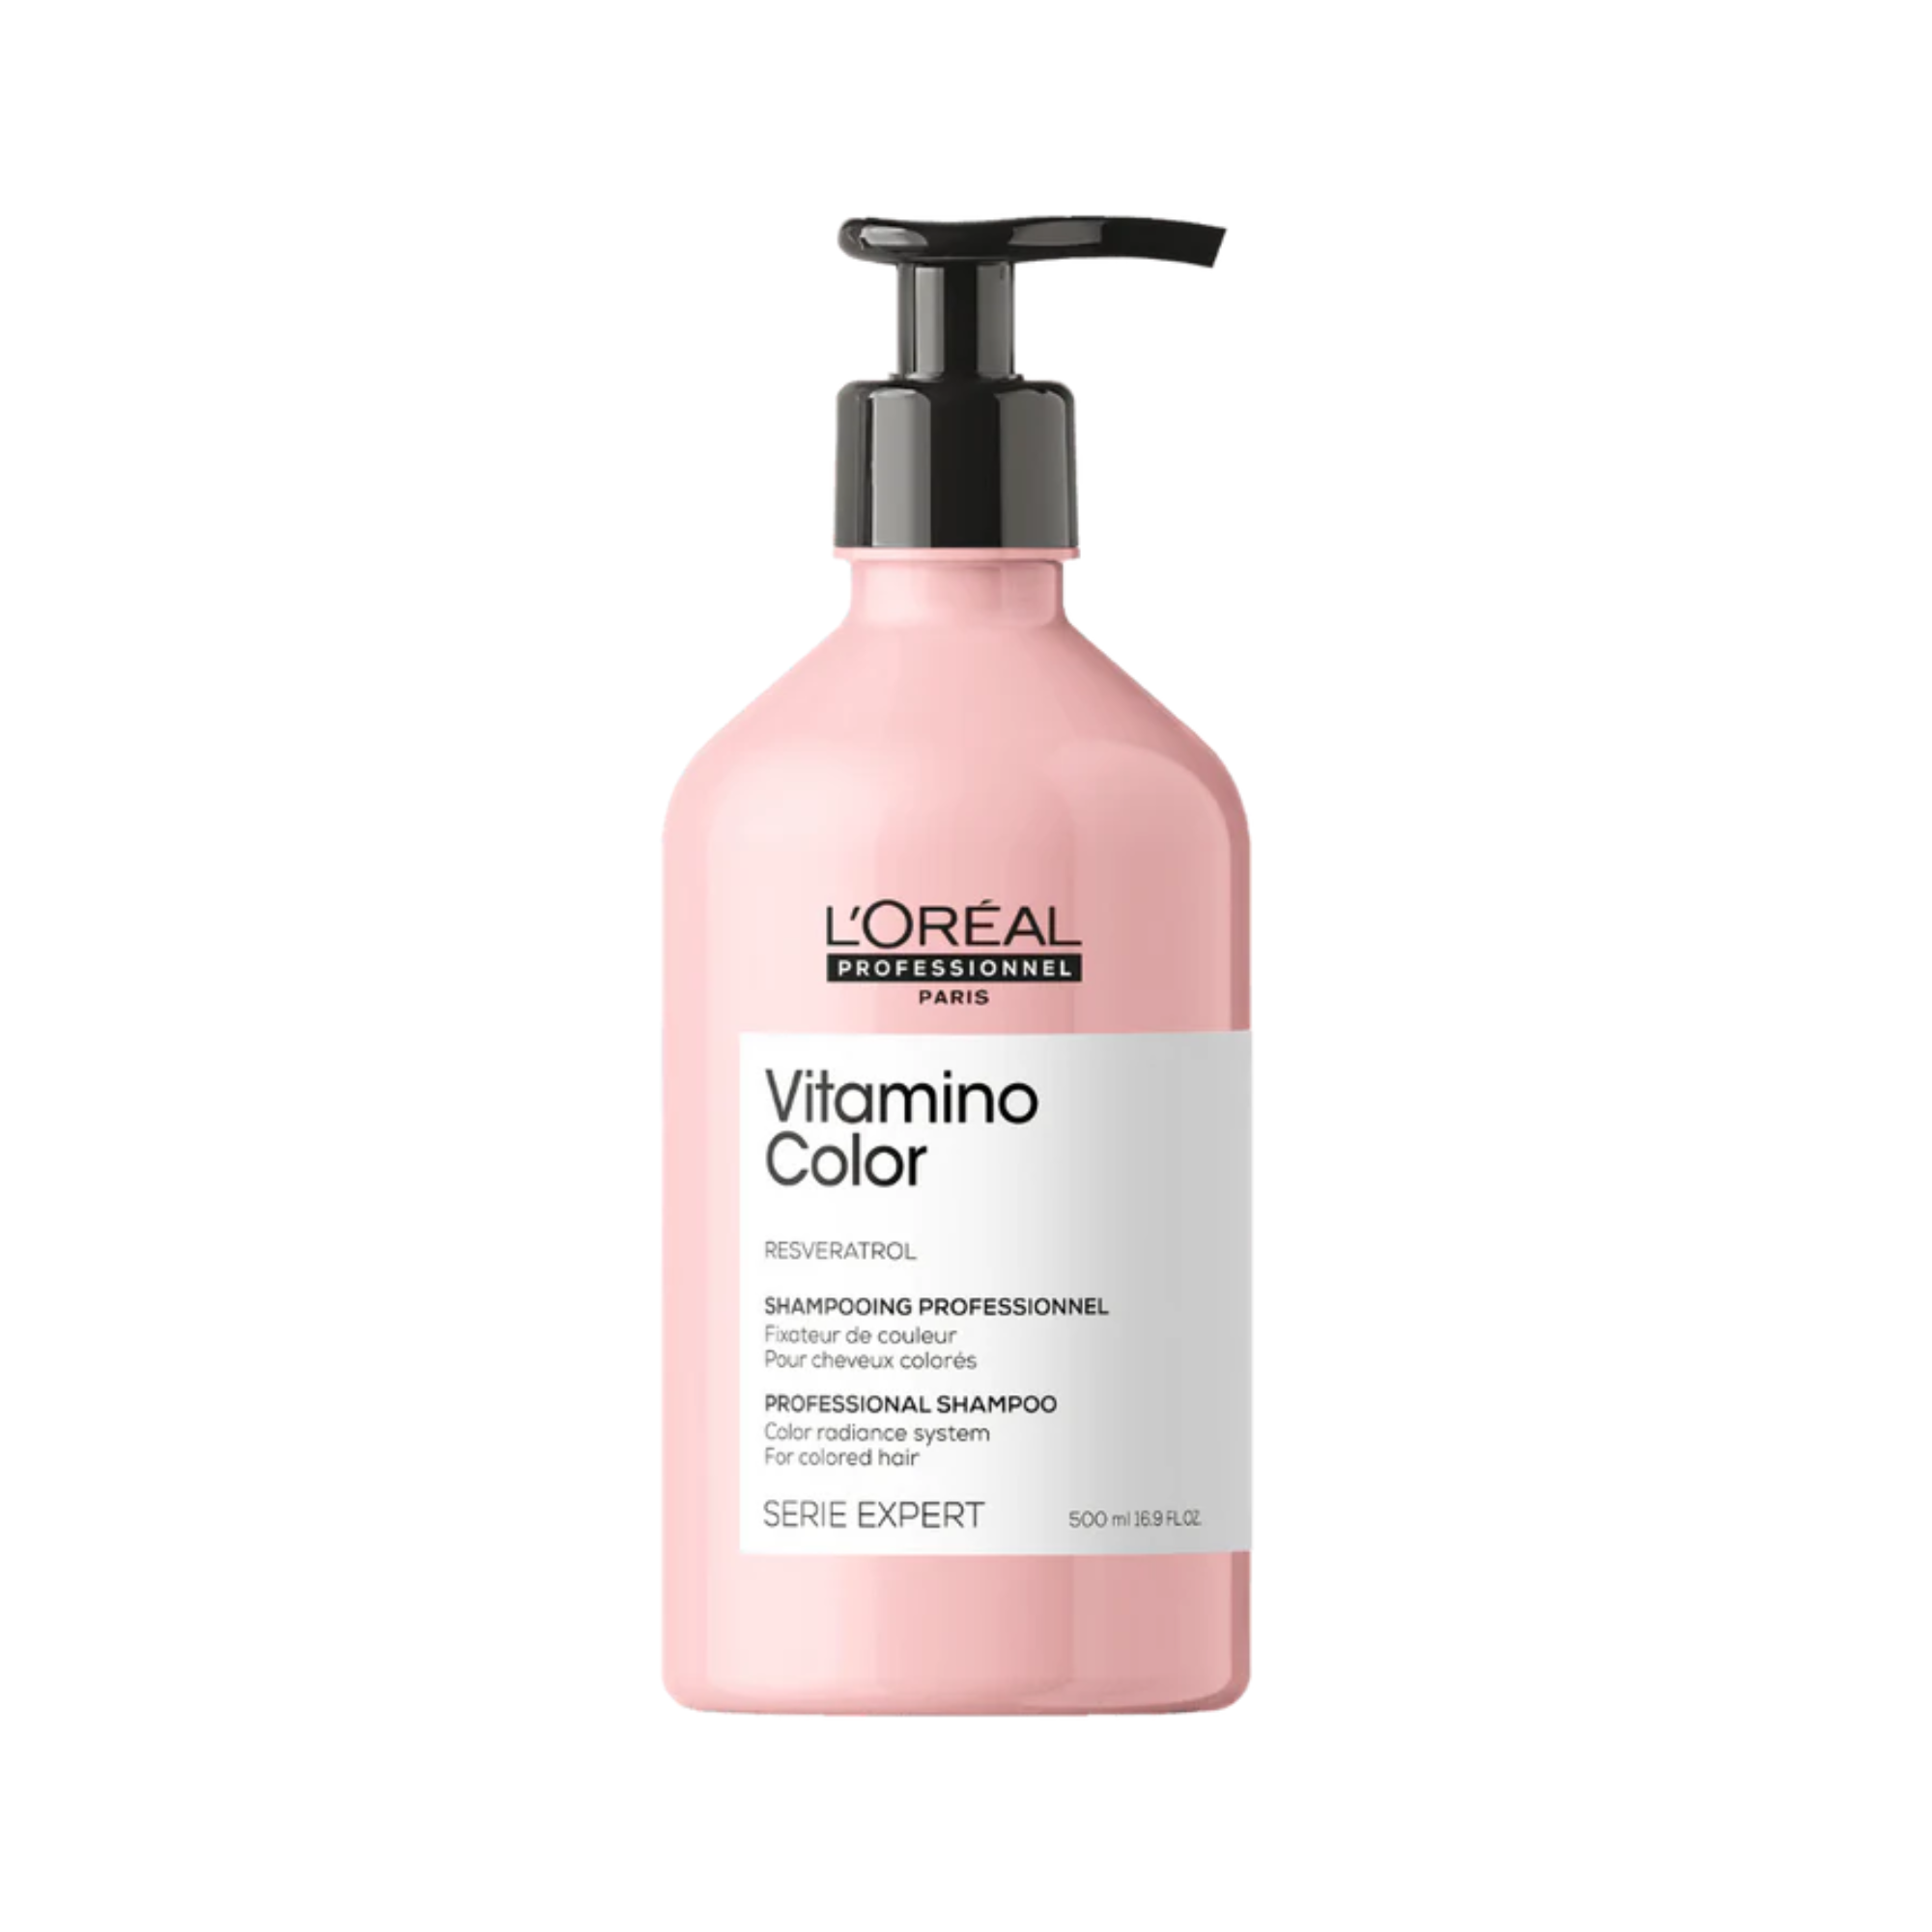 Shampoo L'Oreal Vitamino Color Resveratrol (500 ML)